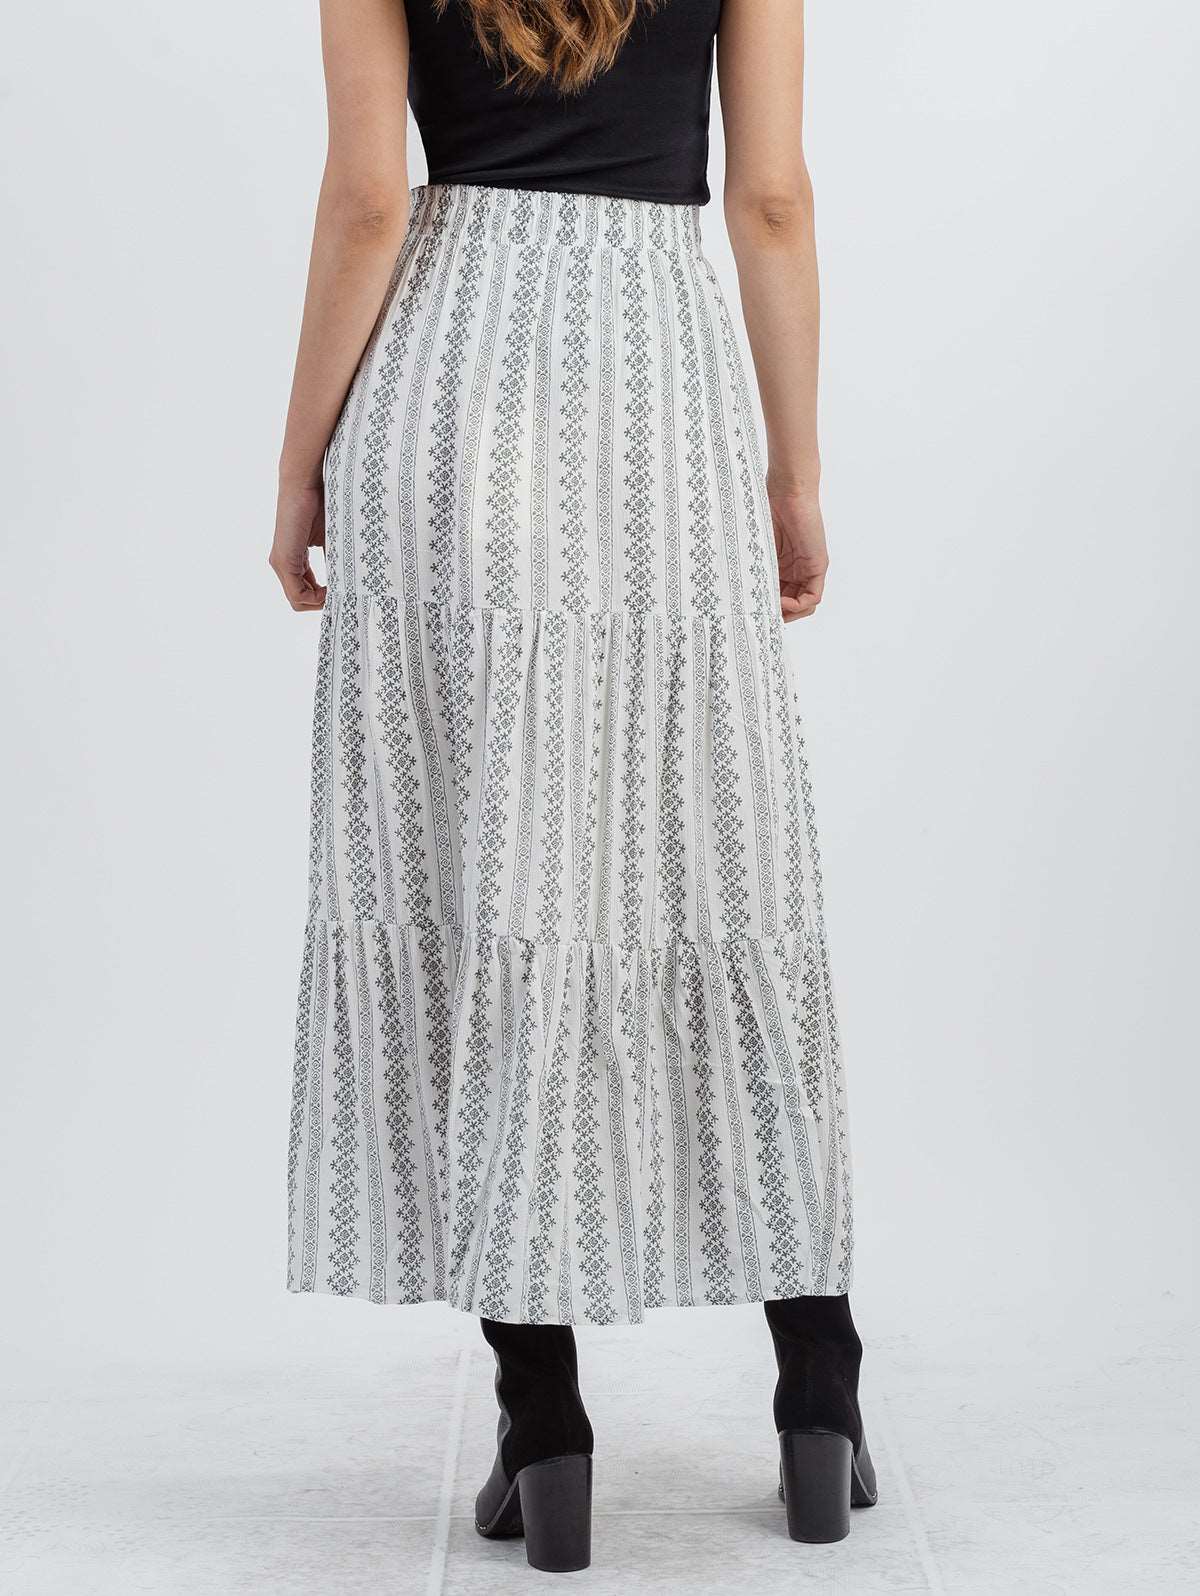 American Bling Women Floral Print Layered Midi Skirt - Montana West World